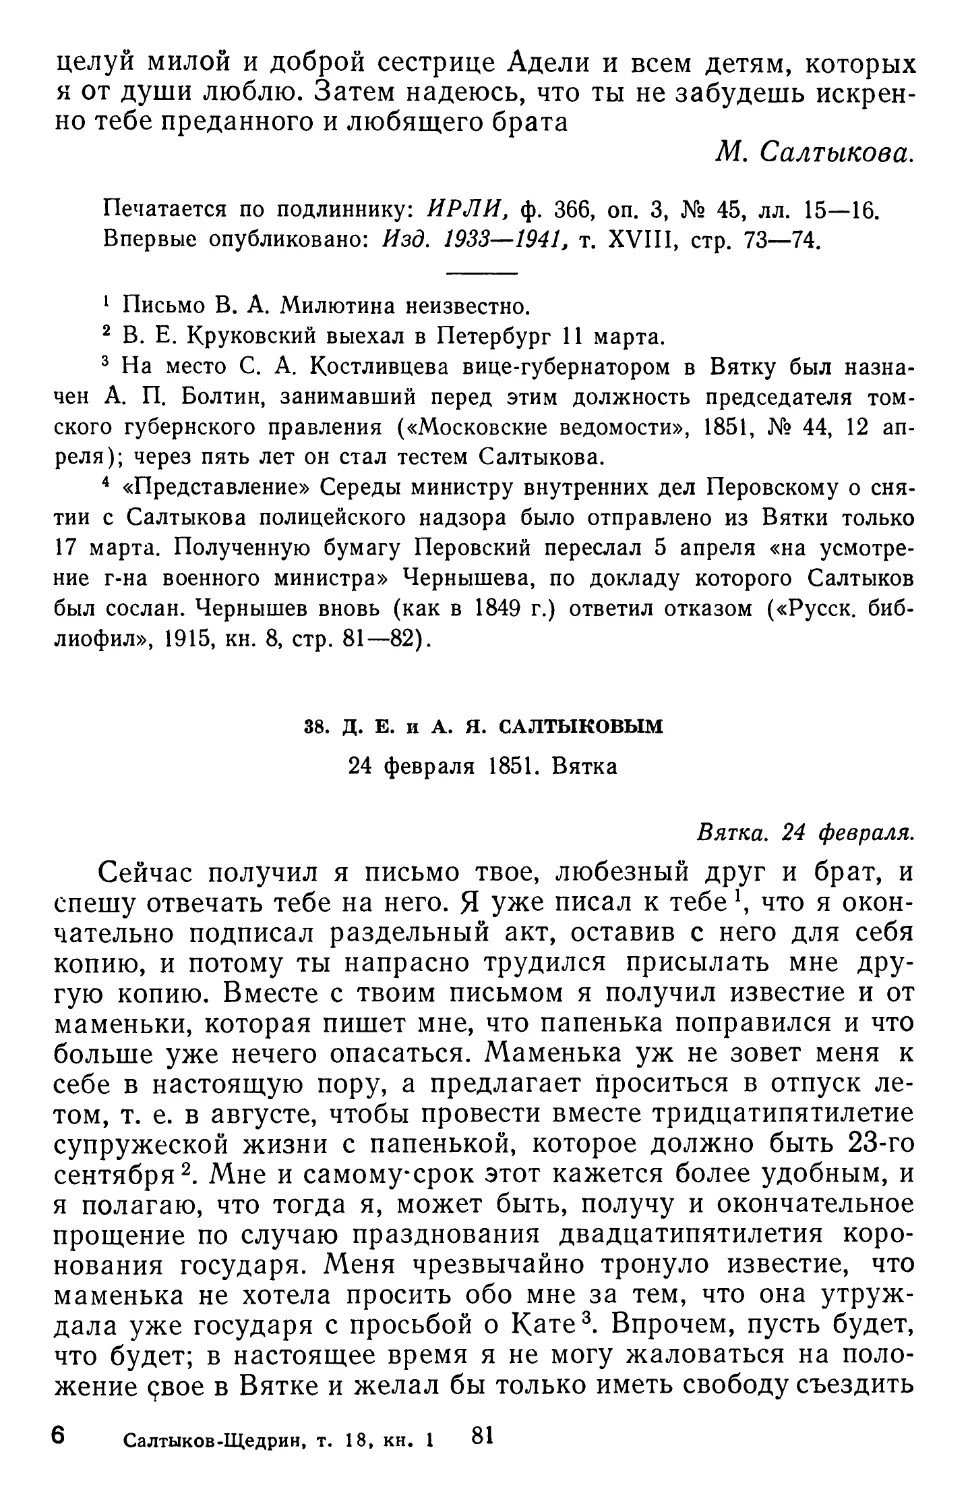 38.Д. Е. и А. Я. Салтыковым. 24 февраля 1851. Вятка